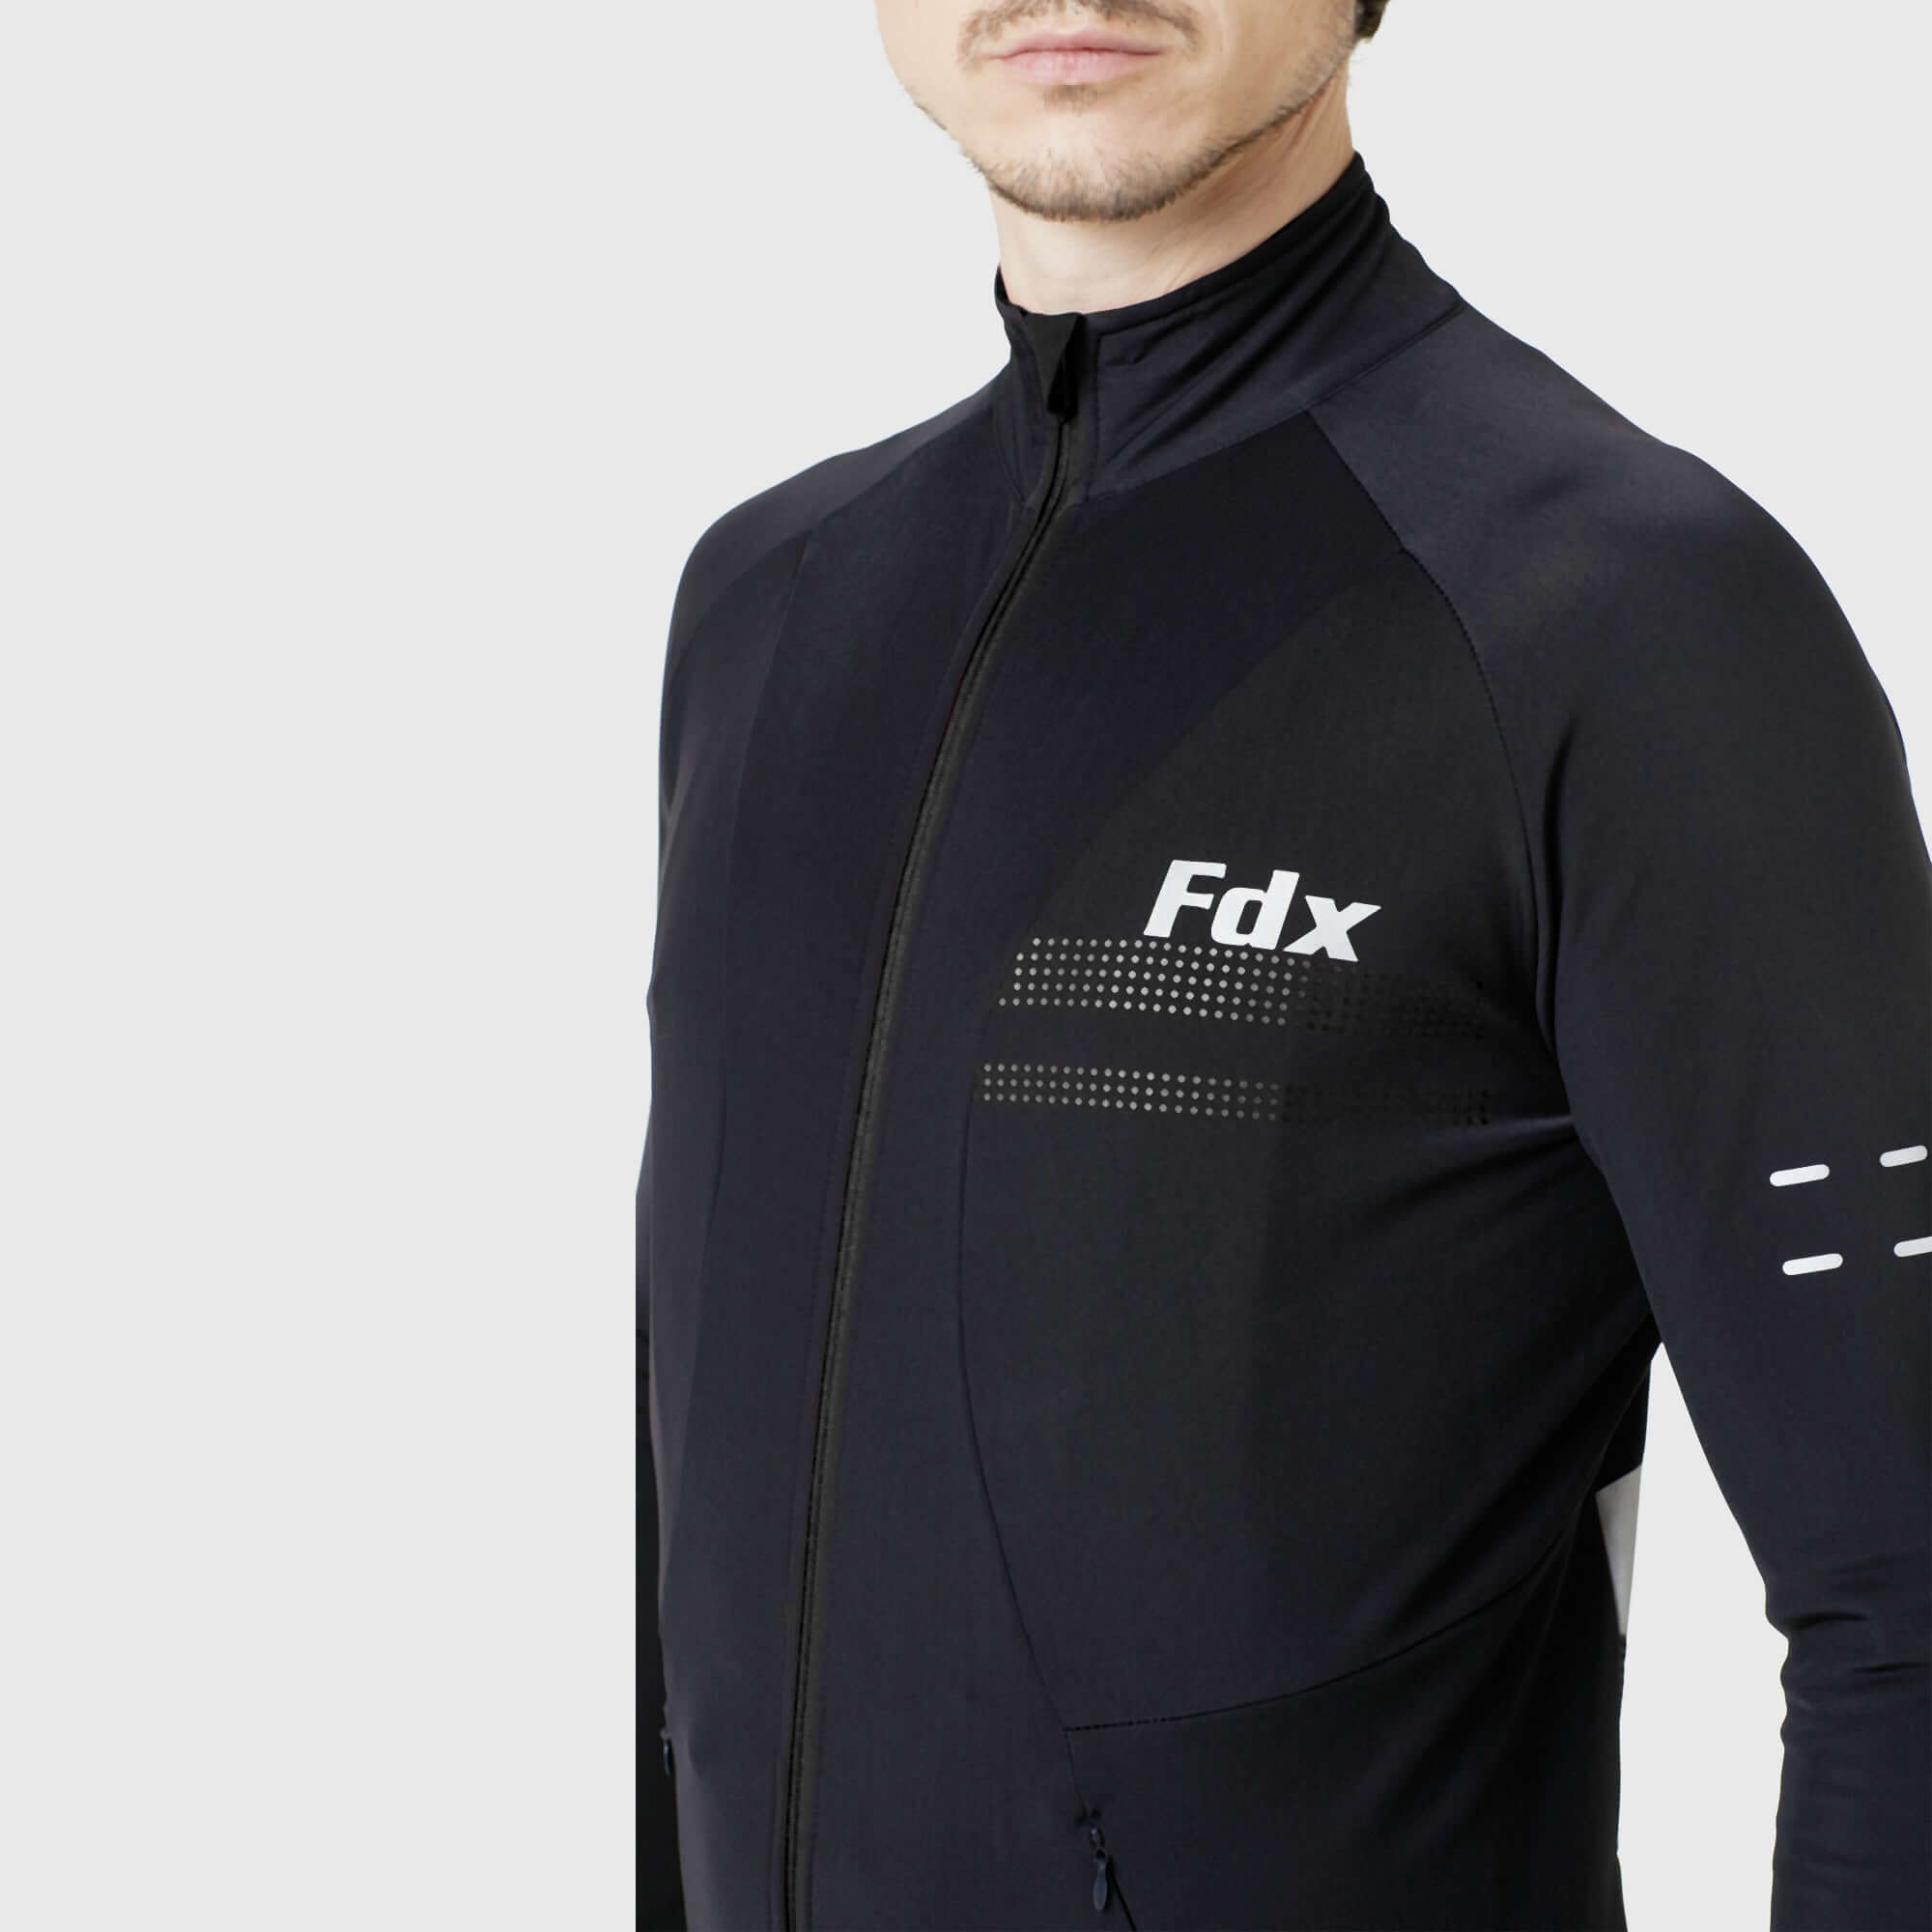 Fdx Warm Cycling Jersey for MensBlack for Winter Roubaix Thermal Fleece Road Bike Wear Top Full Zipper, Pockets & Hi-viz Reflectors - Arch